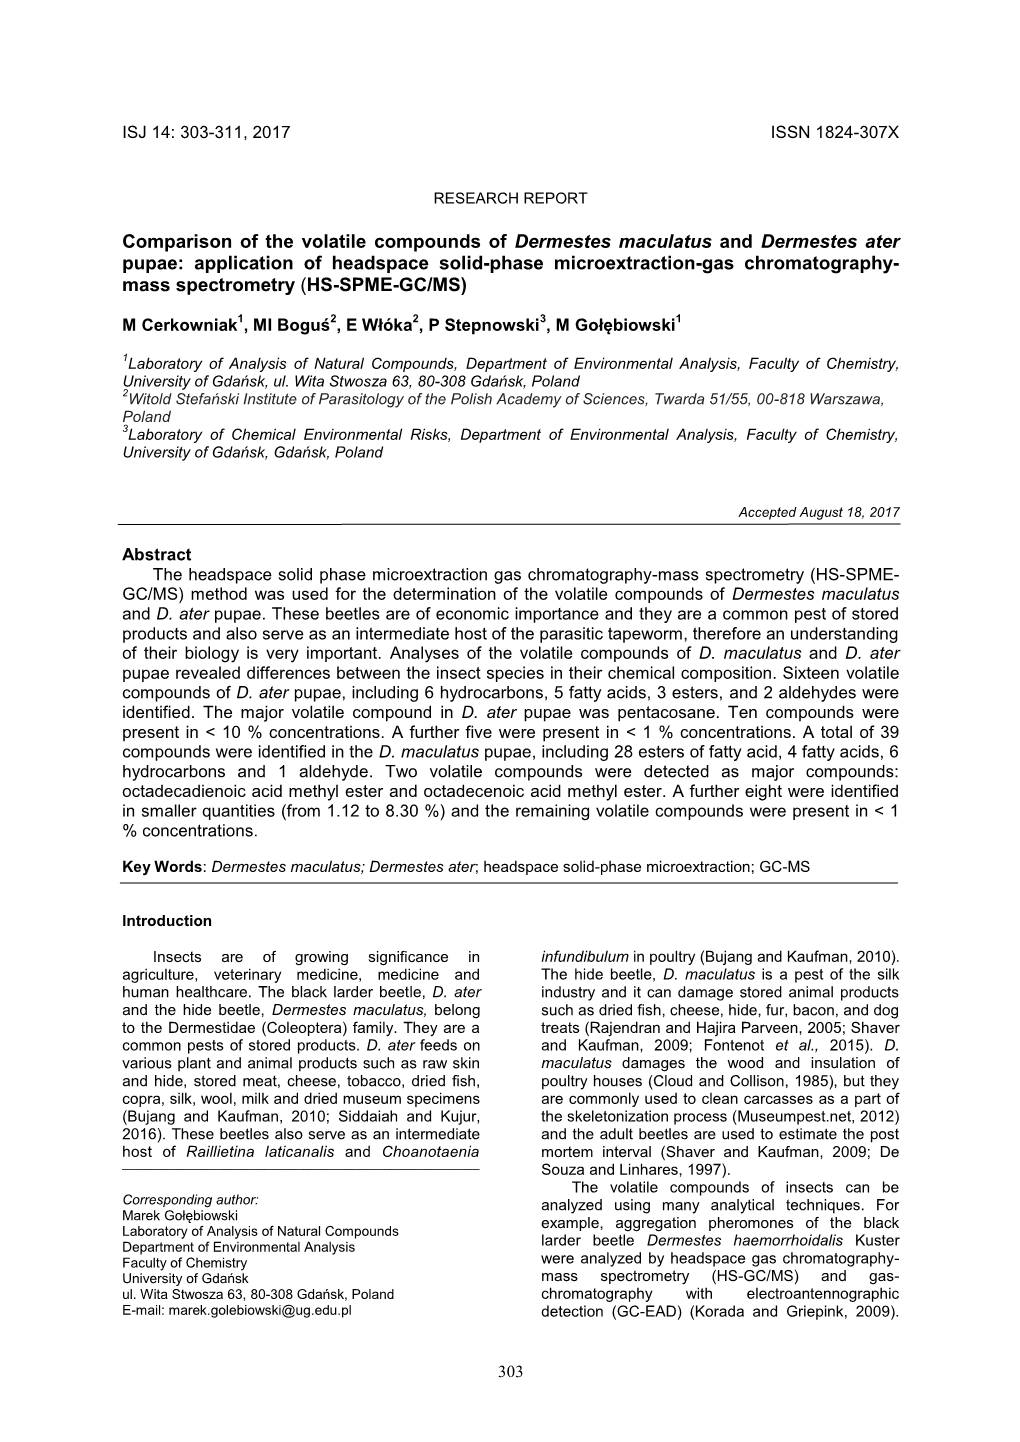 Comparison of the Volatile Compounds of Dermestes Maculatus And